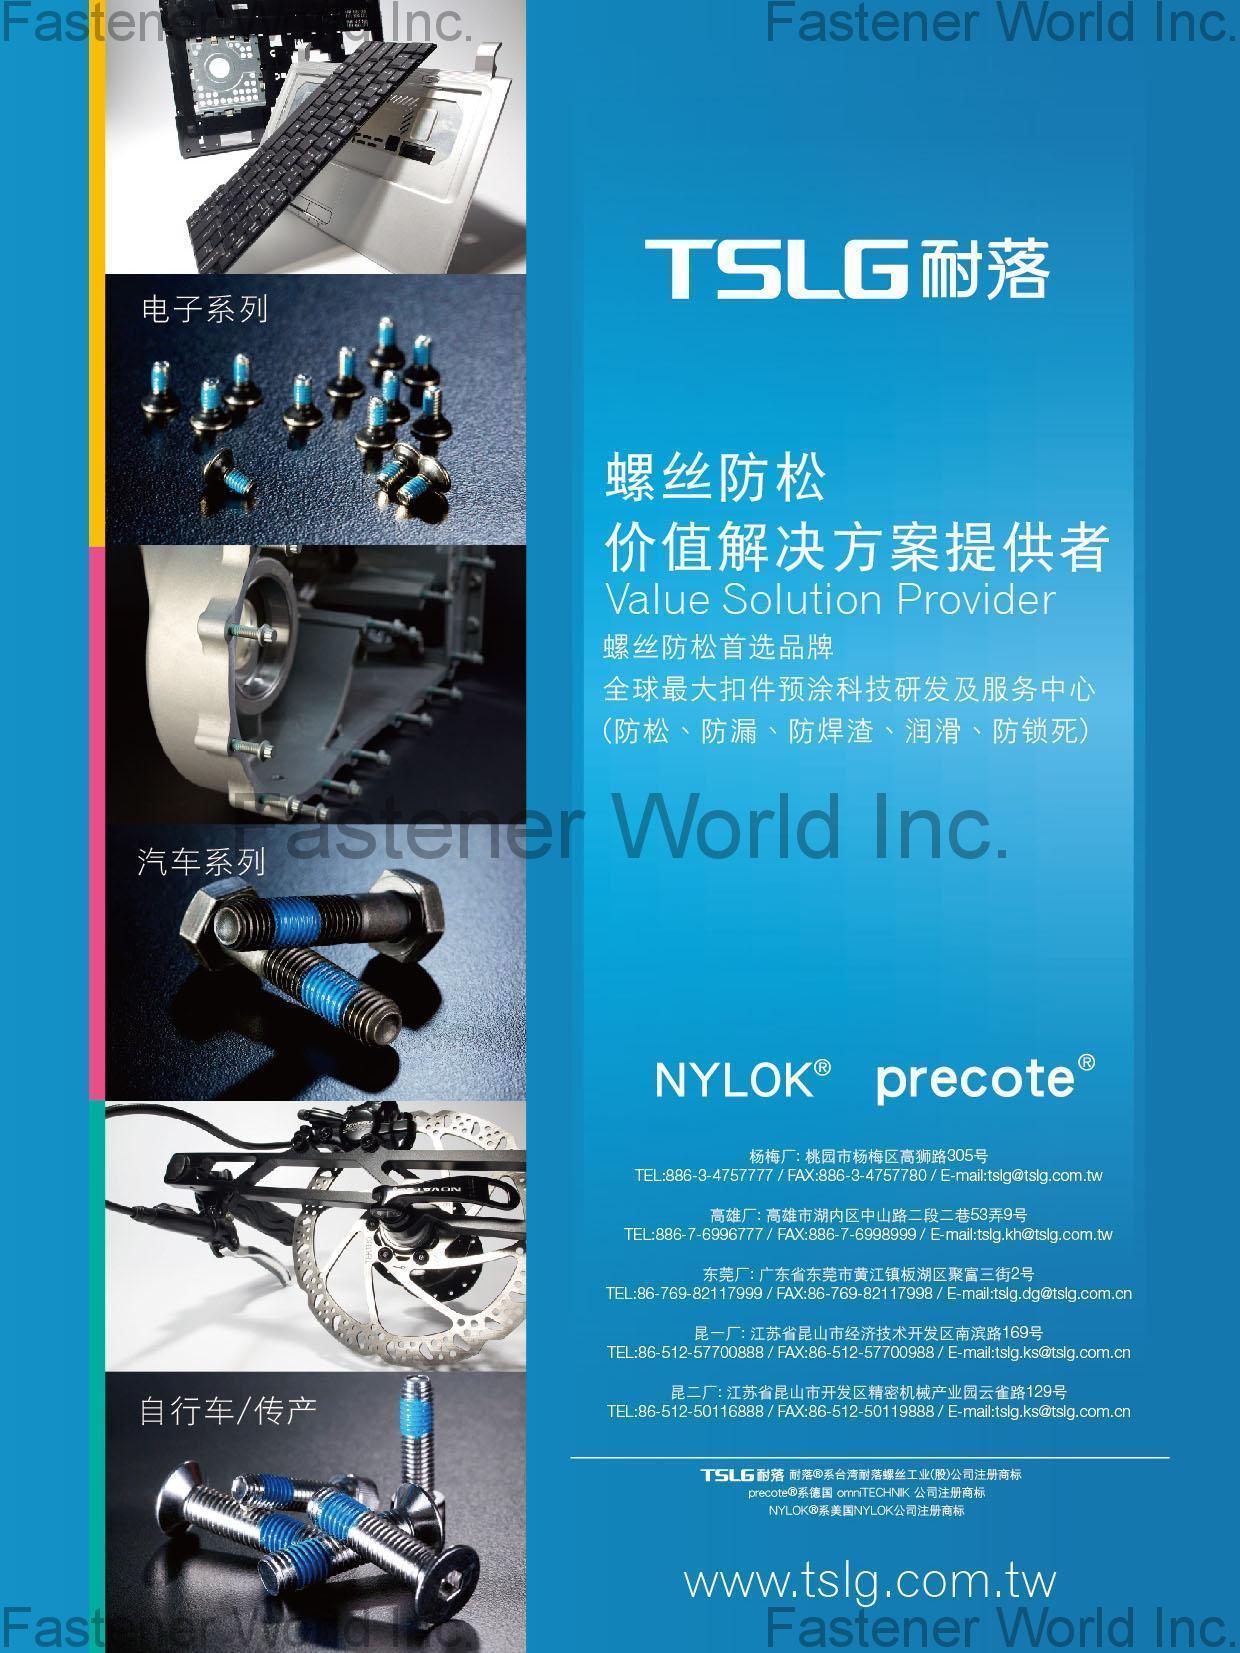 TSLG (TAIWAN SELF-LOCKING FASTENERS IND CO., LTD.)